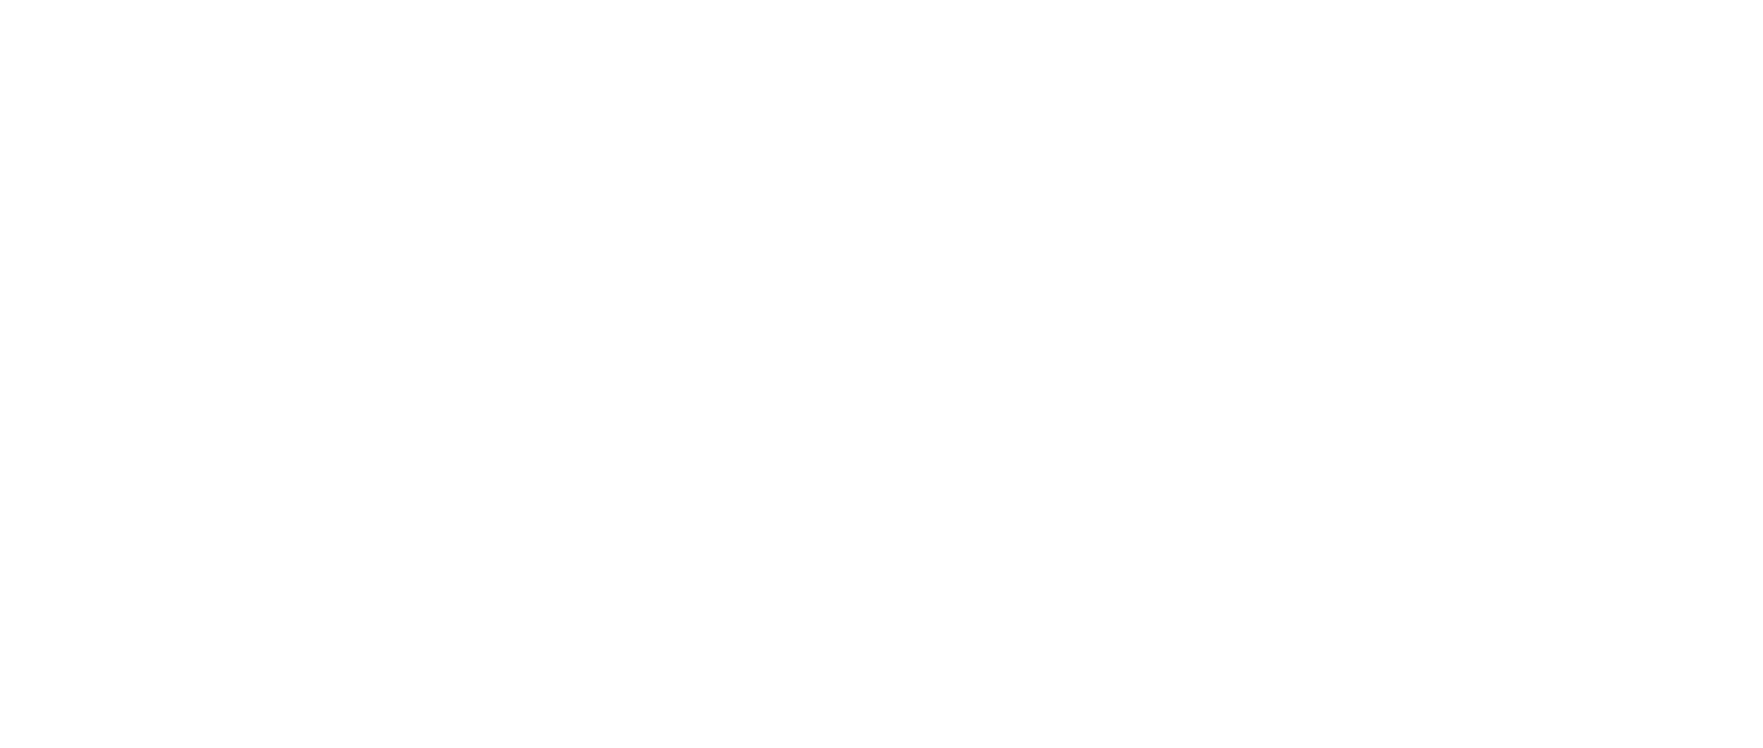 University of Technology, Sydney logo